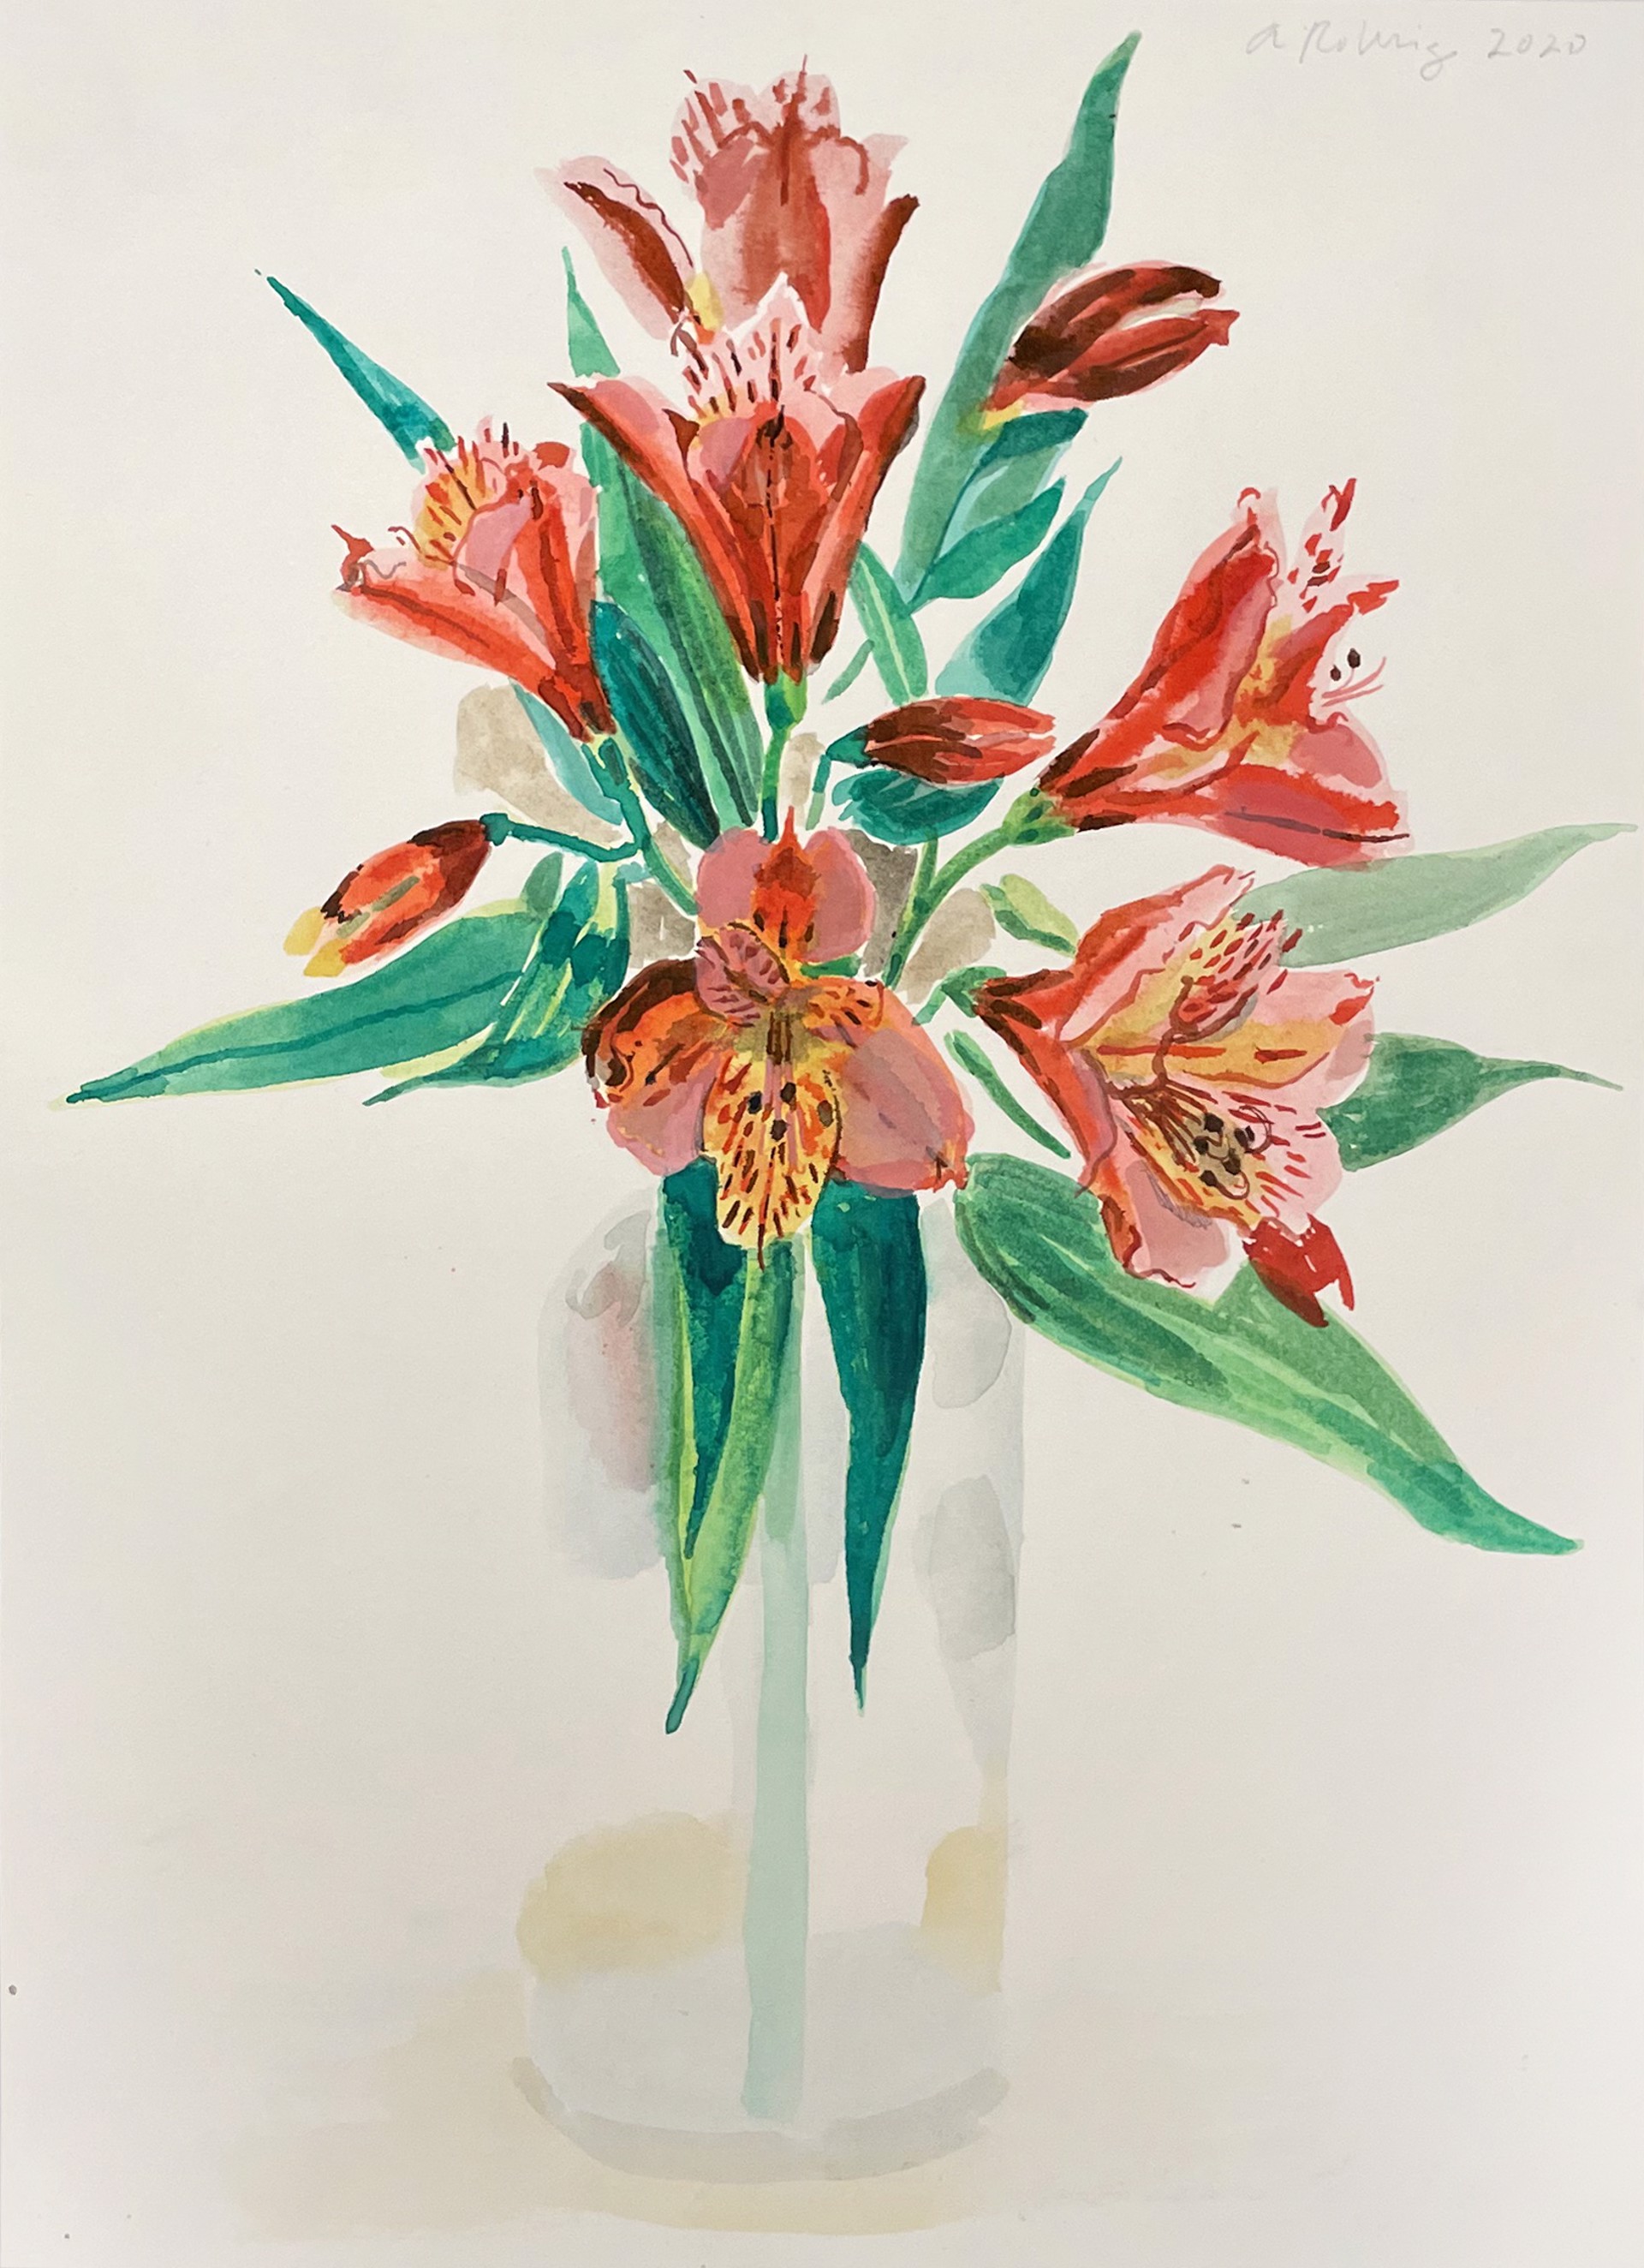 Flowers II (Alstroemeria) by Alexander Rohrig